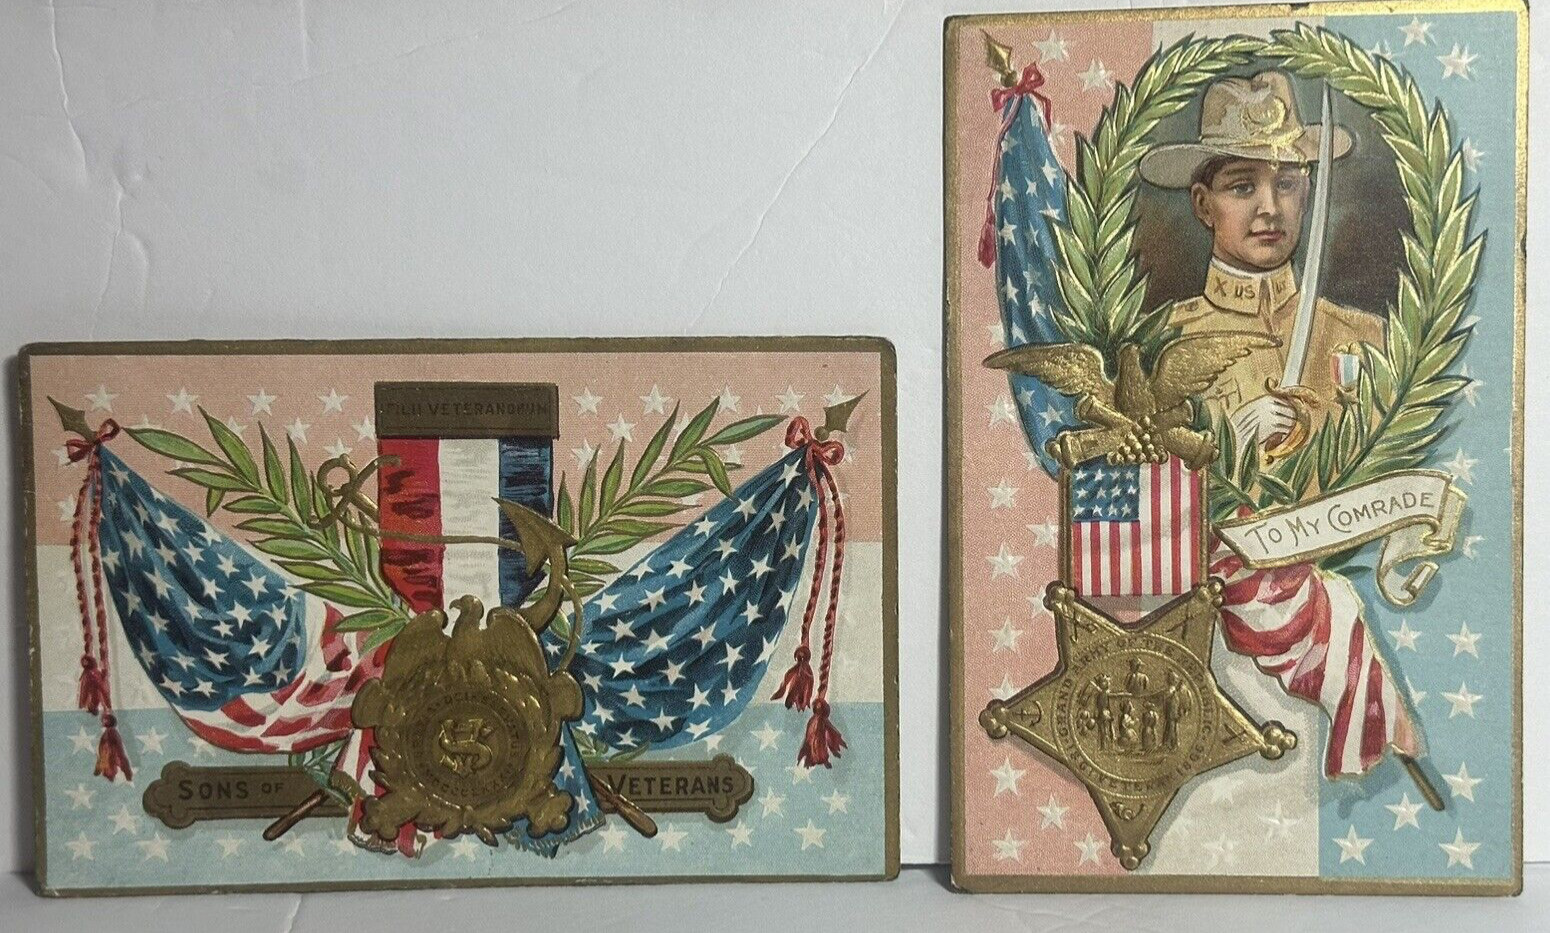 Decoration Day GAR Postcard Patriotic To My Comrade Sons of Veterans Nash Lot 2